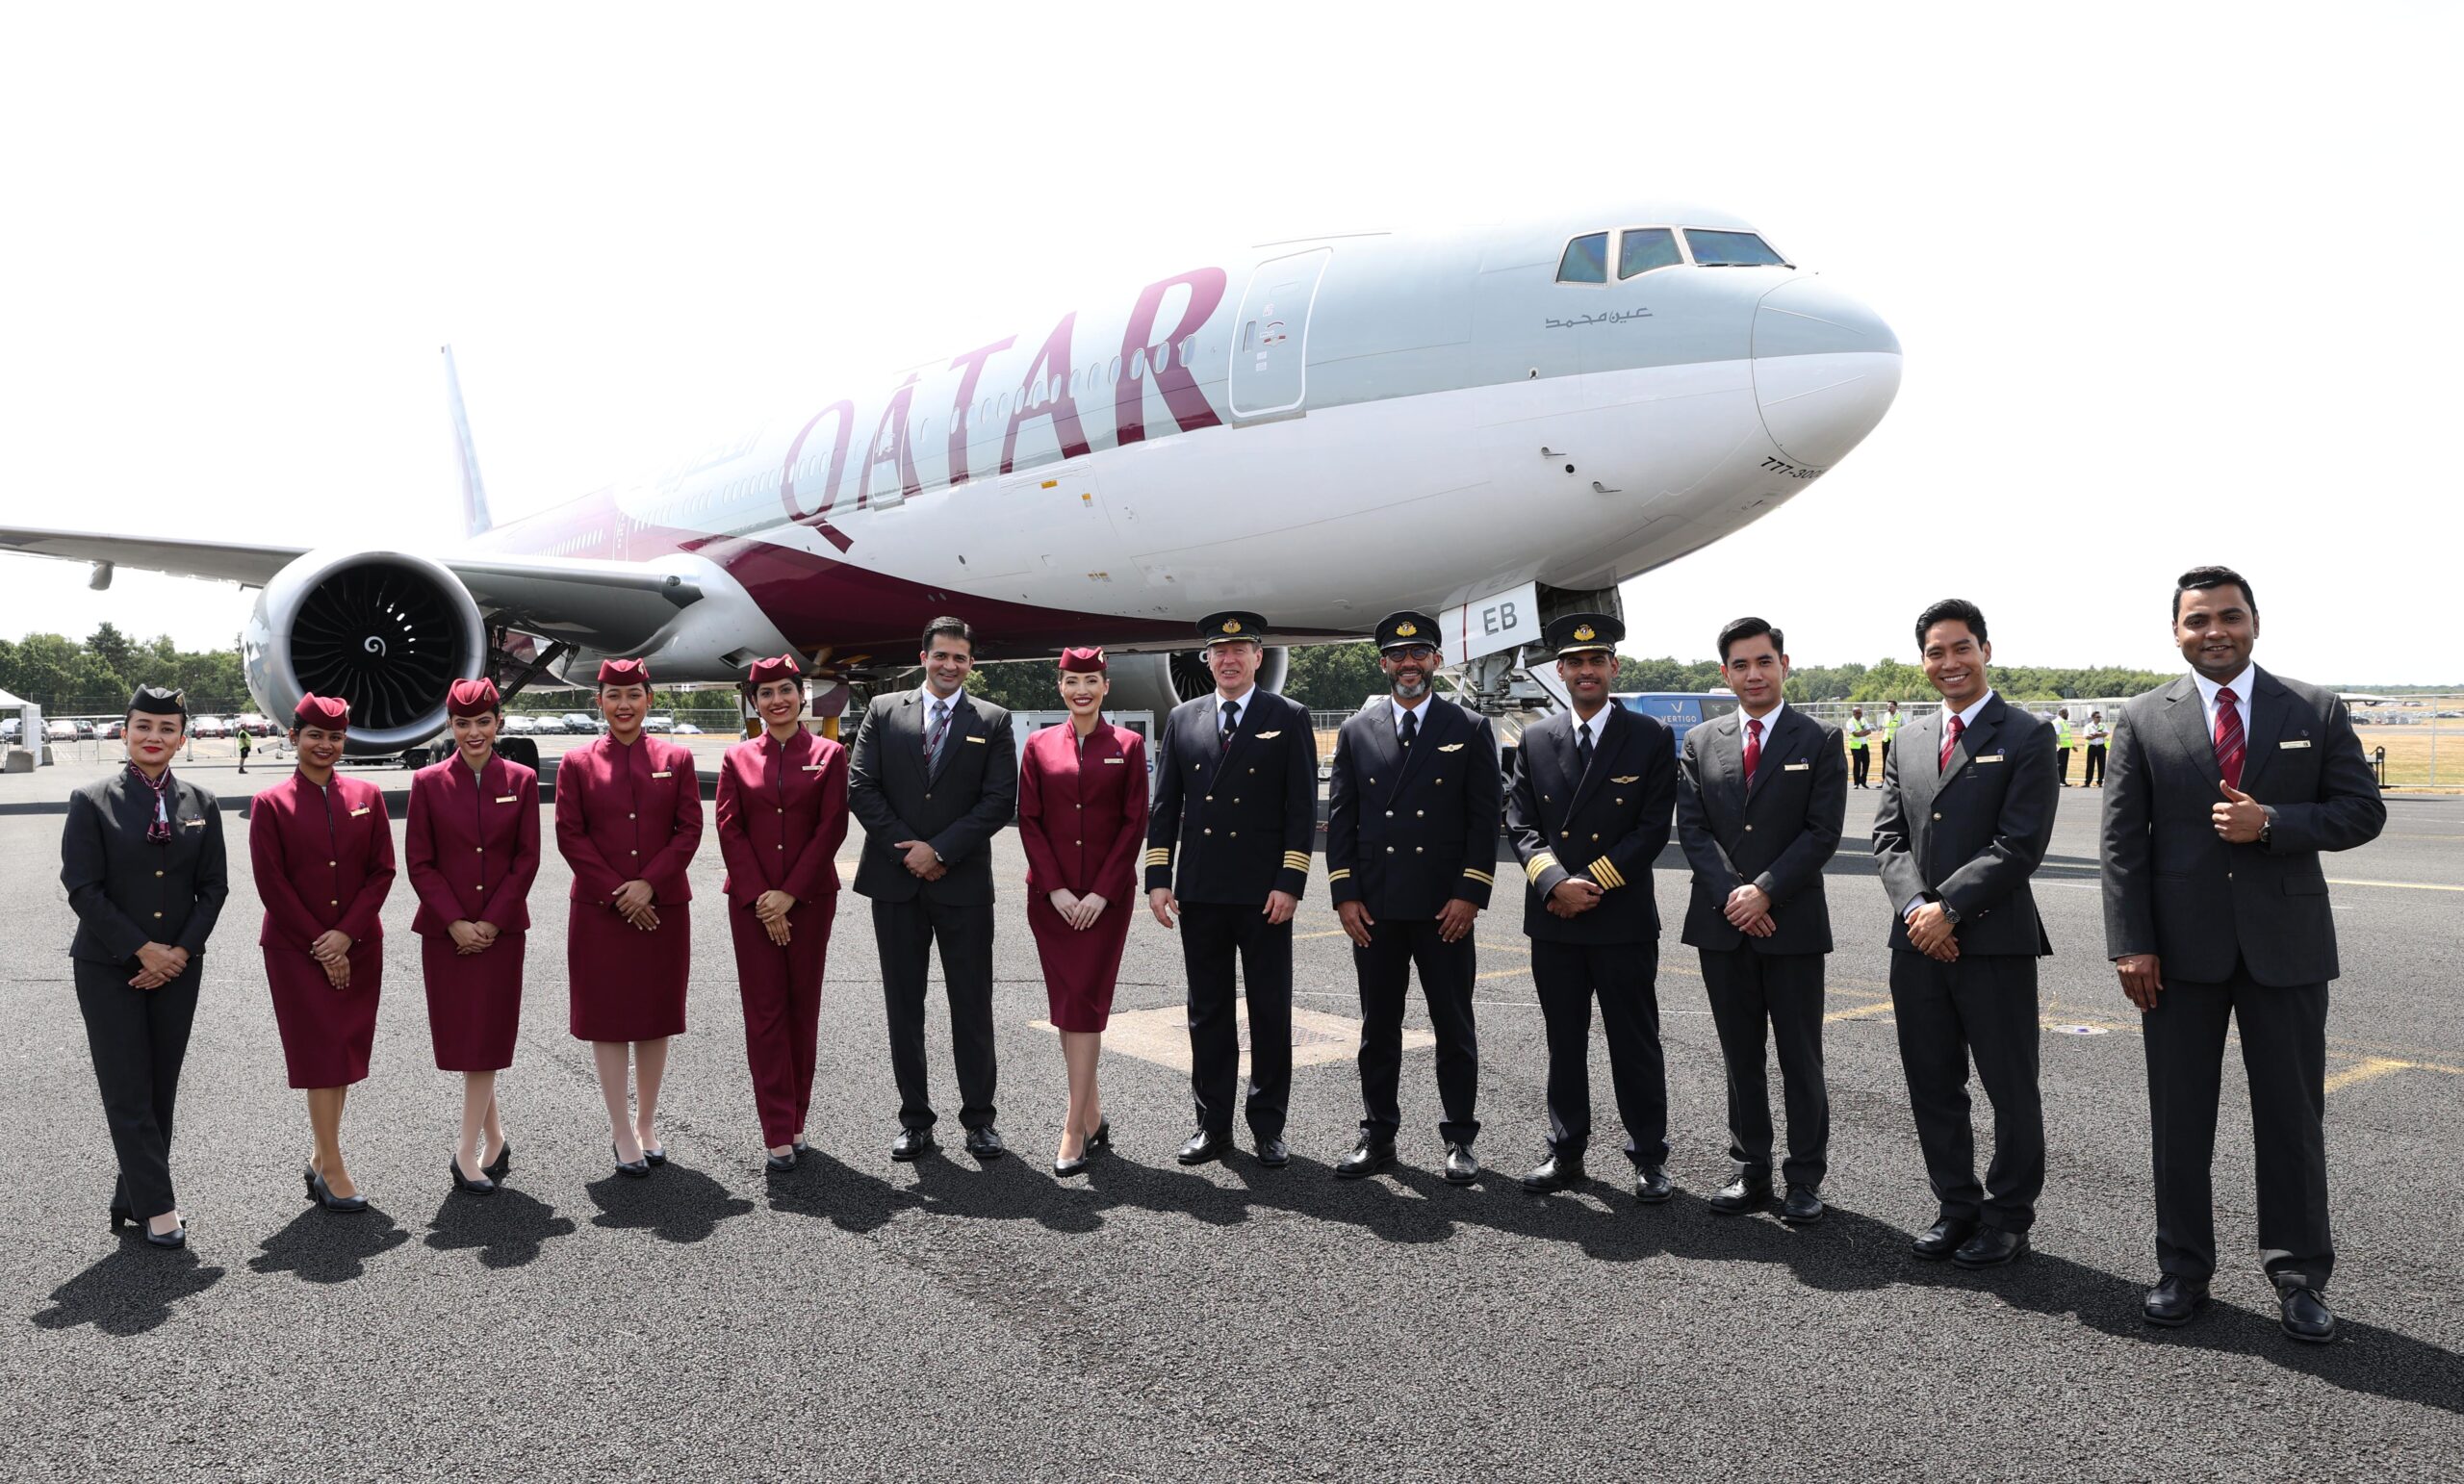 Qatar Airways Achieves Remarkable Milestone with Highest-Ever Revenue